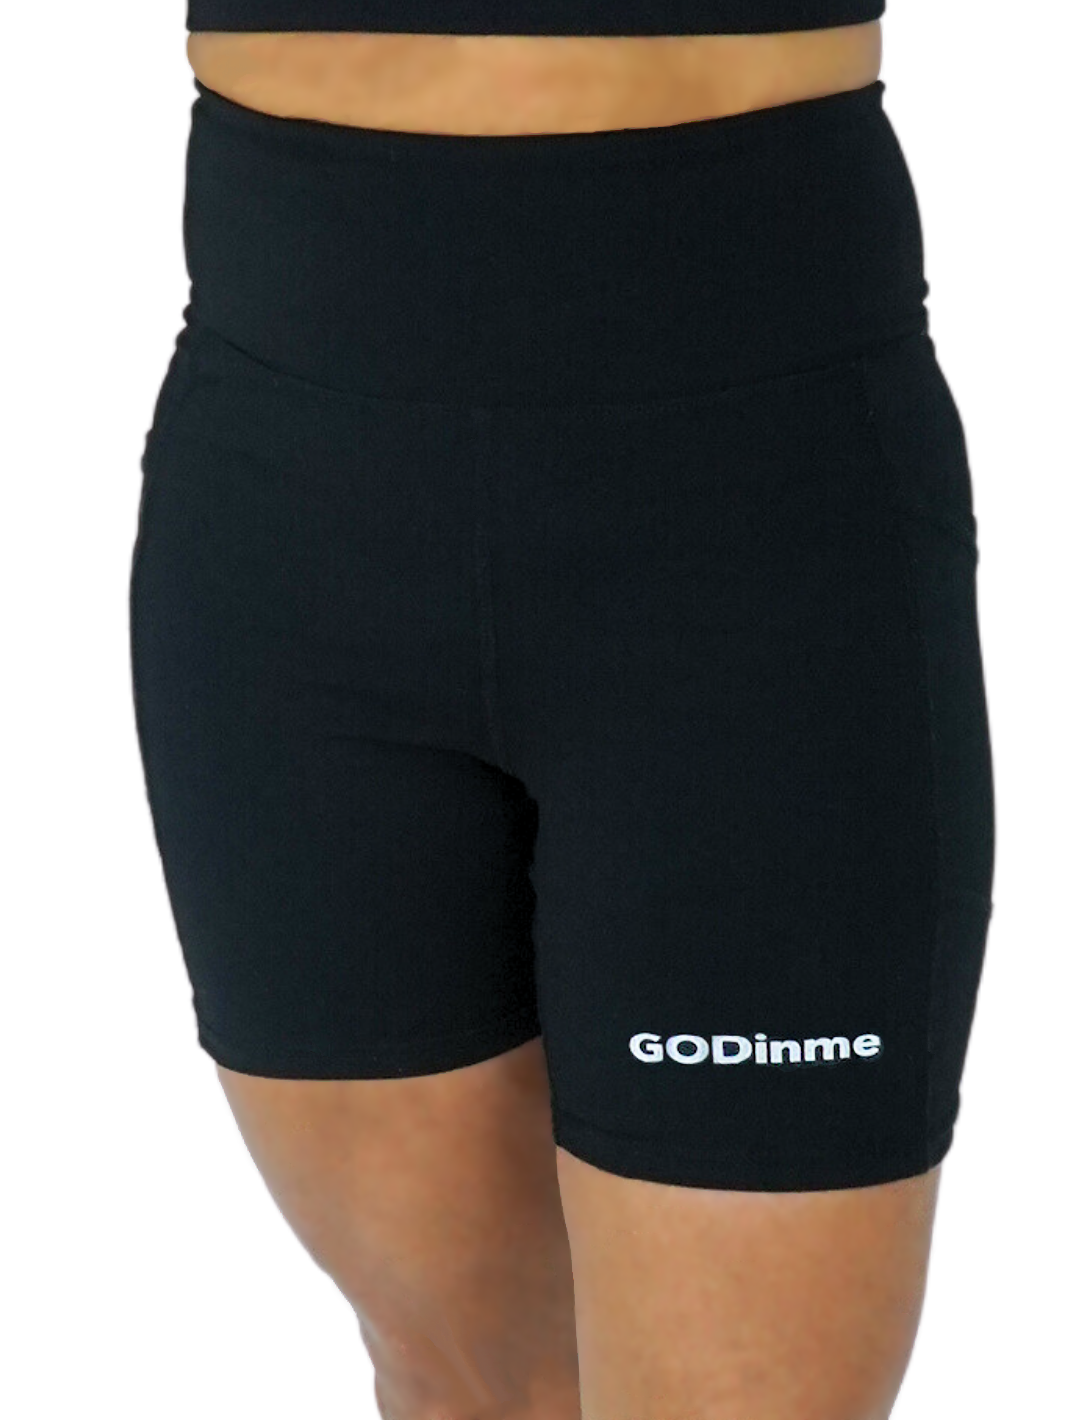 High waist ab support, Bermuda length, Biker shorts, Black color with GODinme brand name printed on left leg